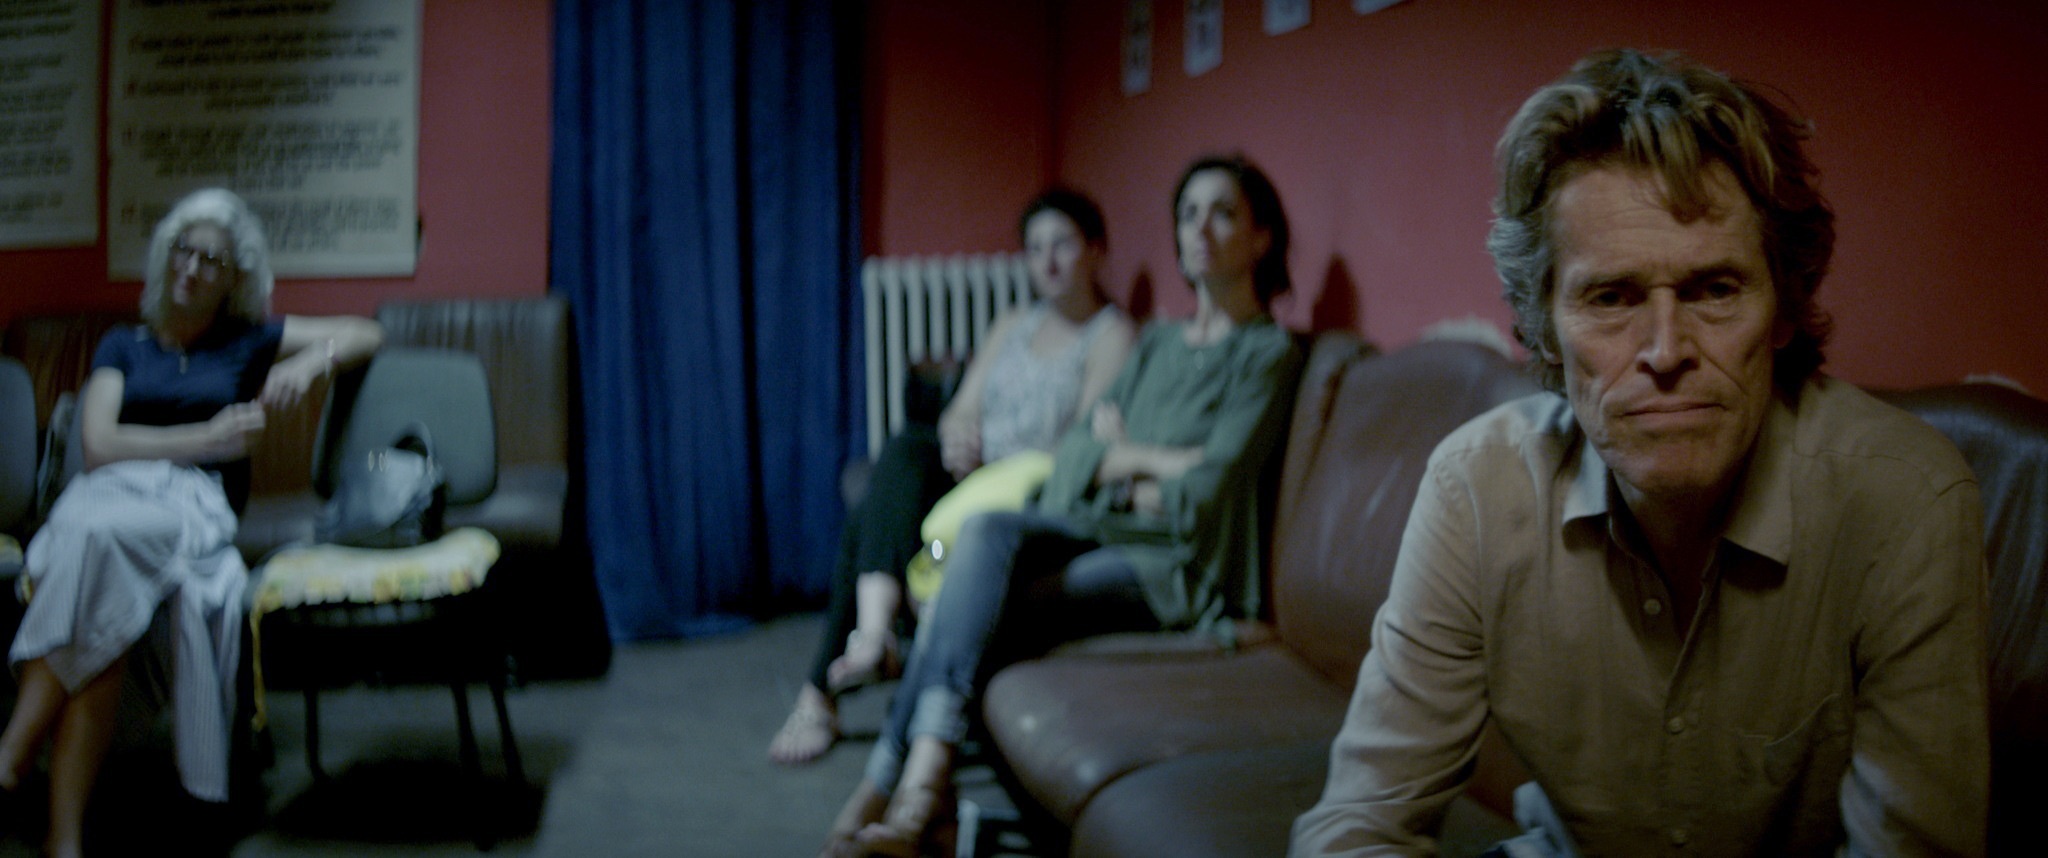 Willem Dafoe stars in Abel Ferrara's newest film 